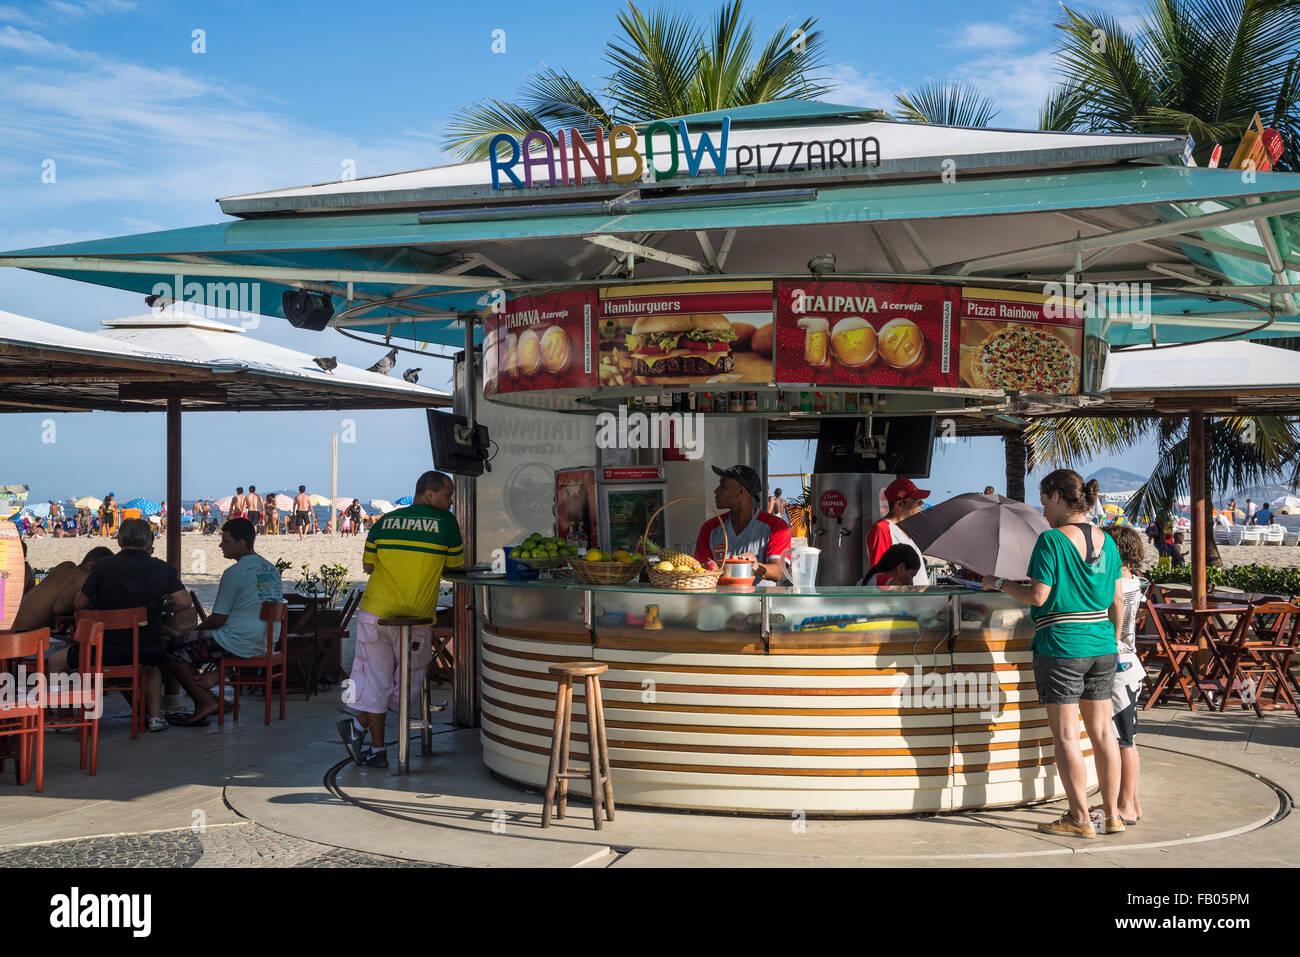 Rainbow pizzeria kiosque, Quiosque Atlantico, Copacabana, Rio de Janeiro, Brazil Stock Photo